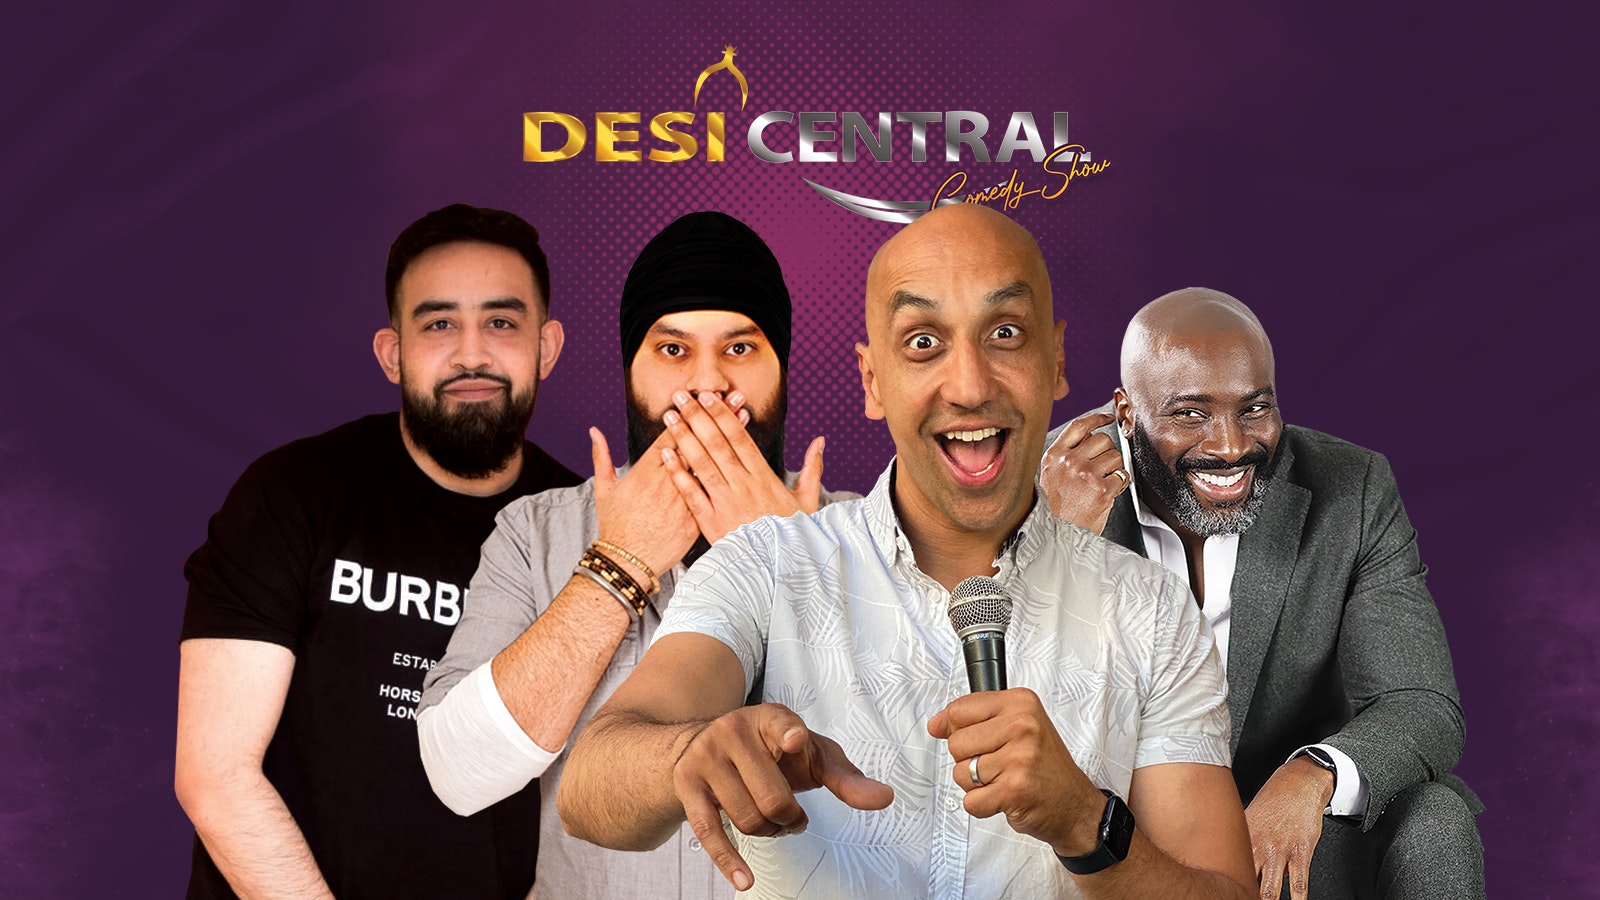 Desi Central Comedy Show – Derby